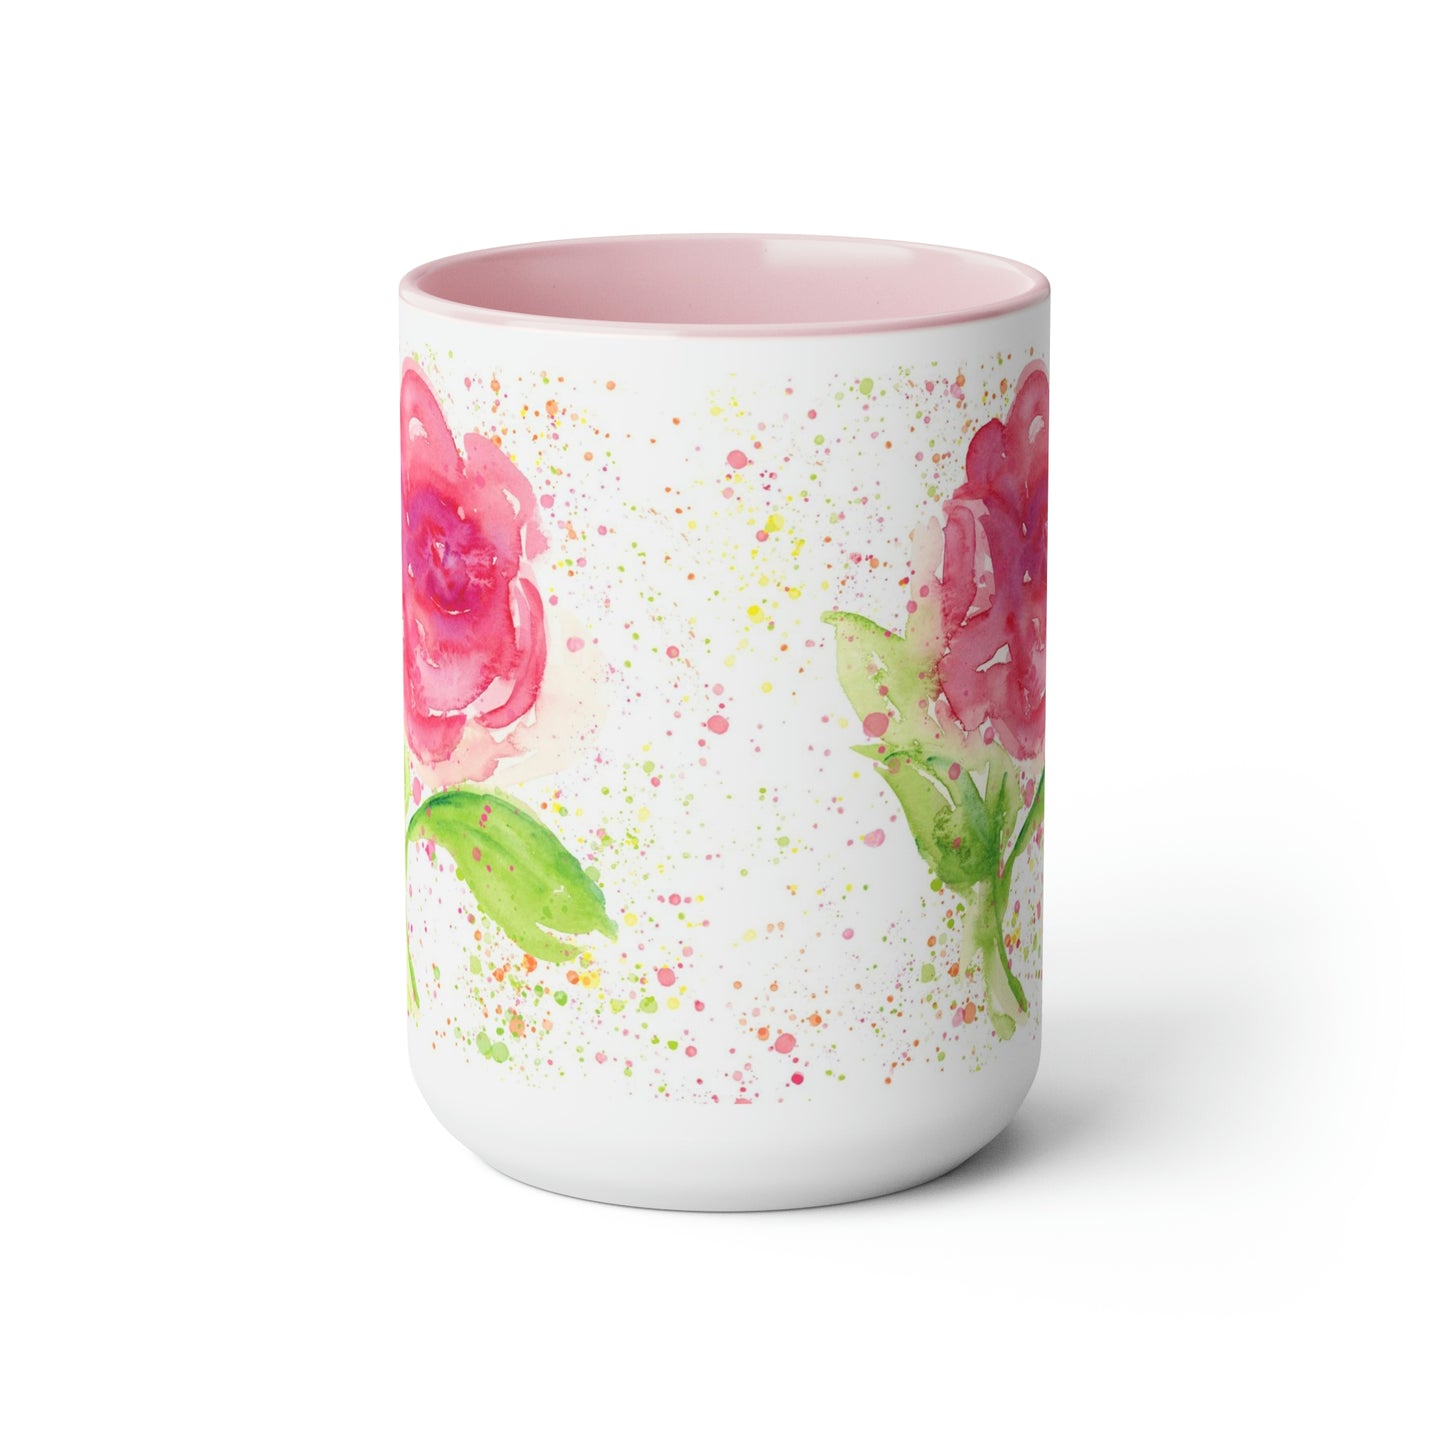 Whimsical Pink Rose, Floral 15oz Ceramic Mug